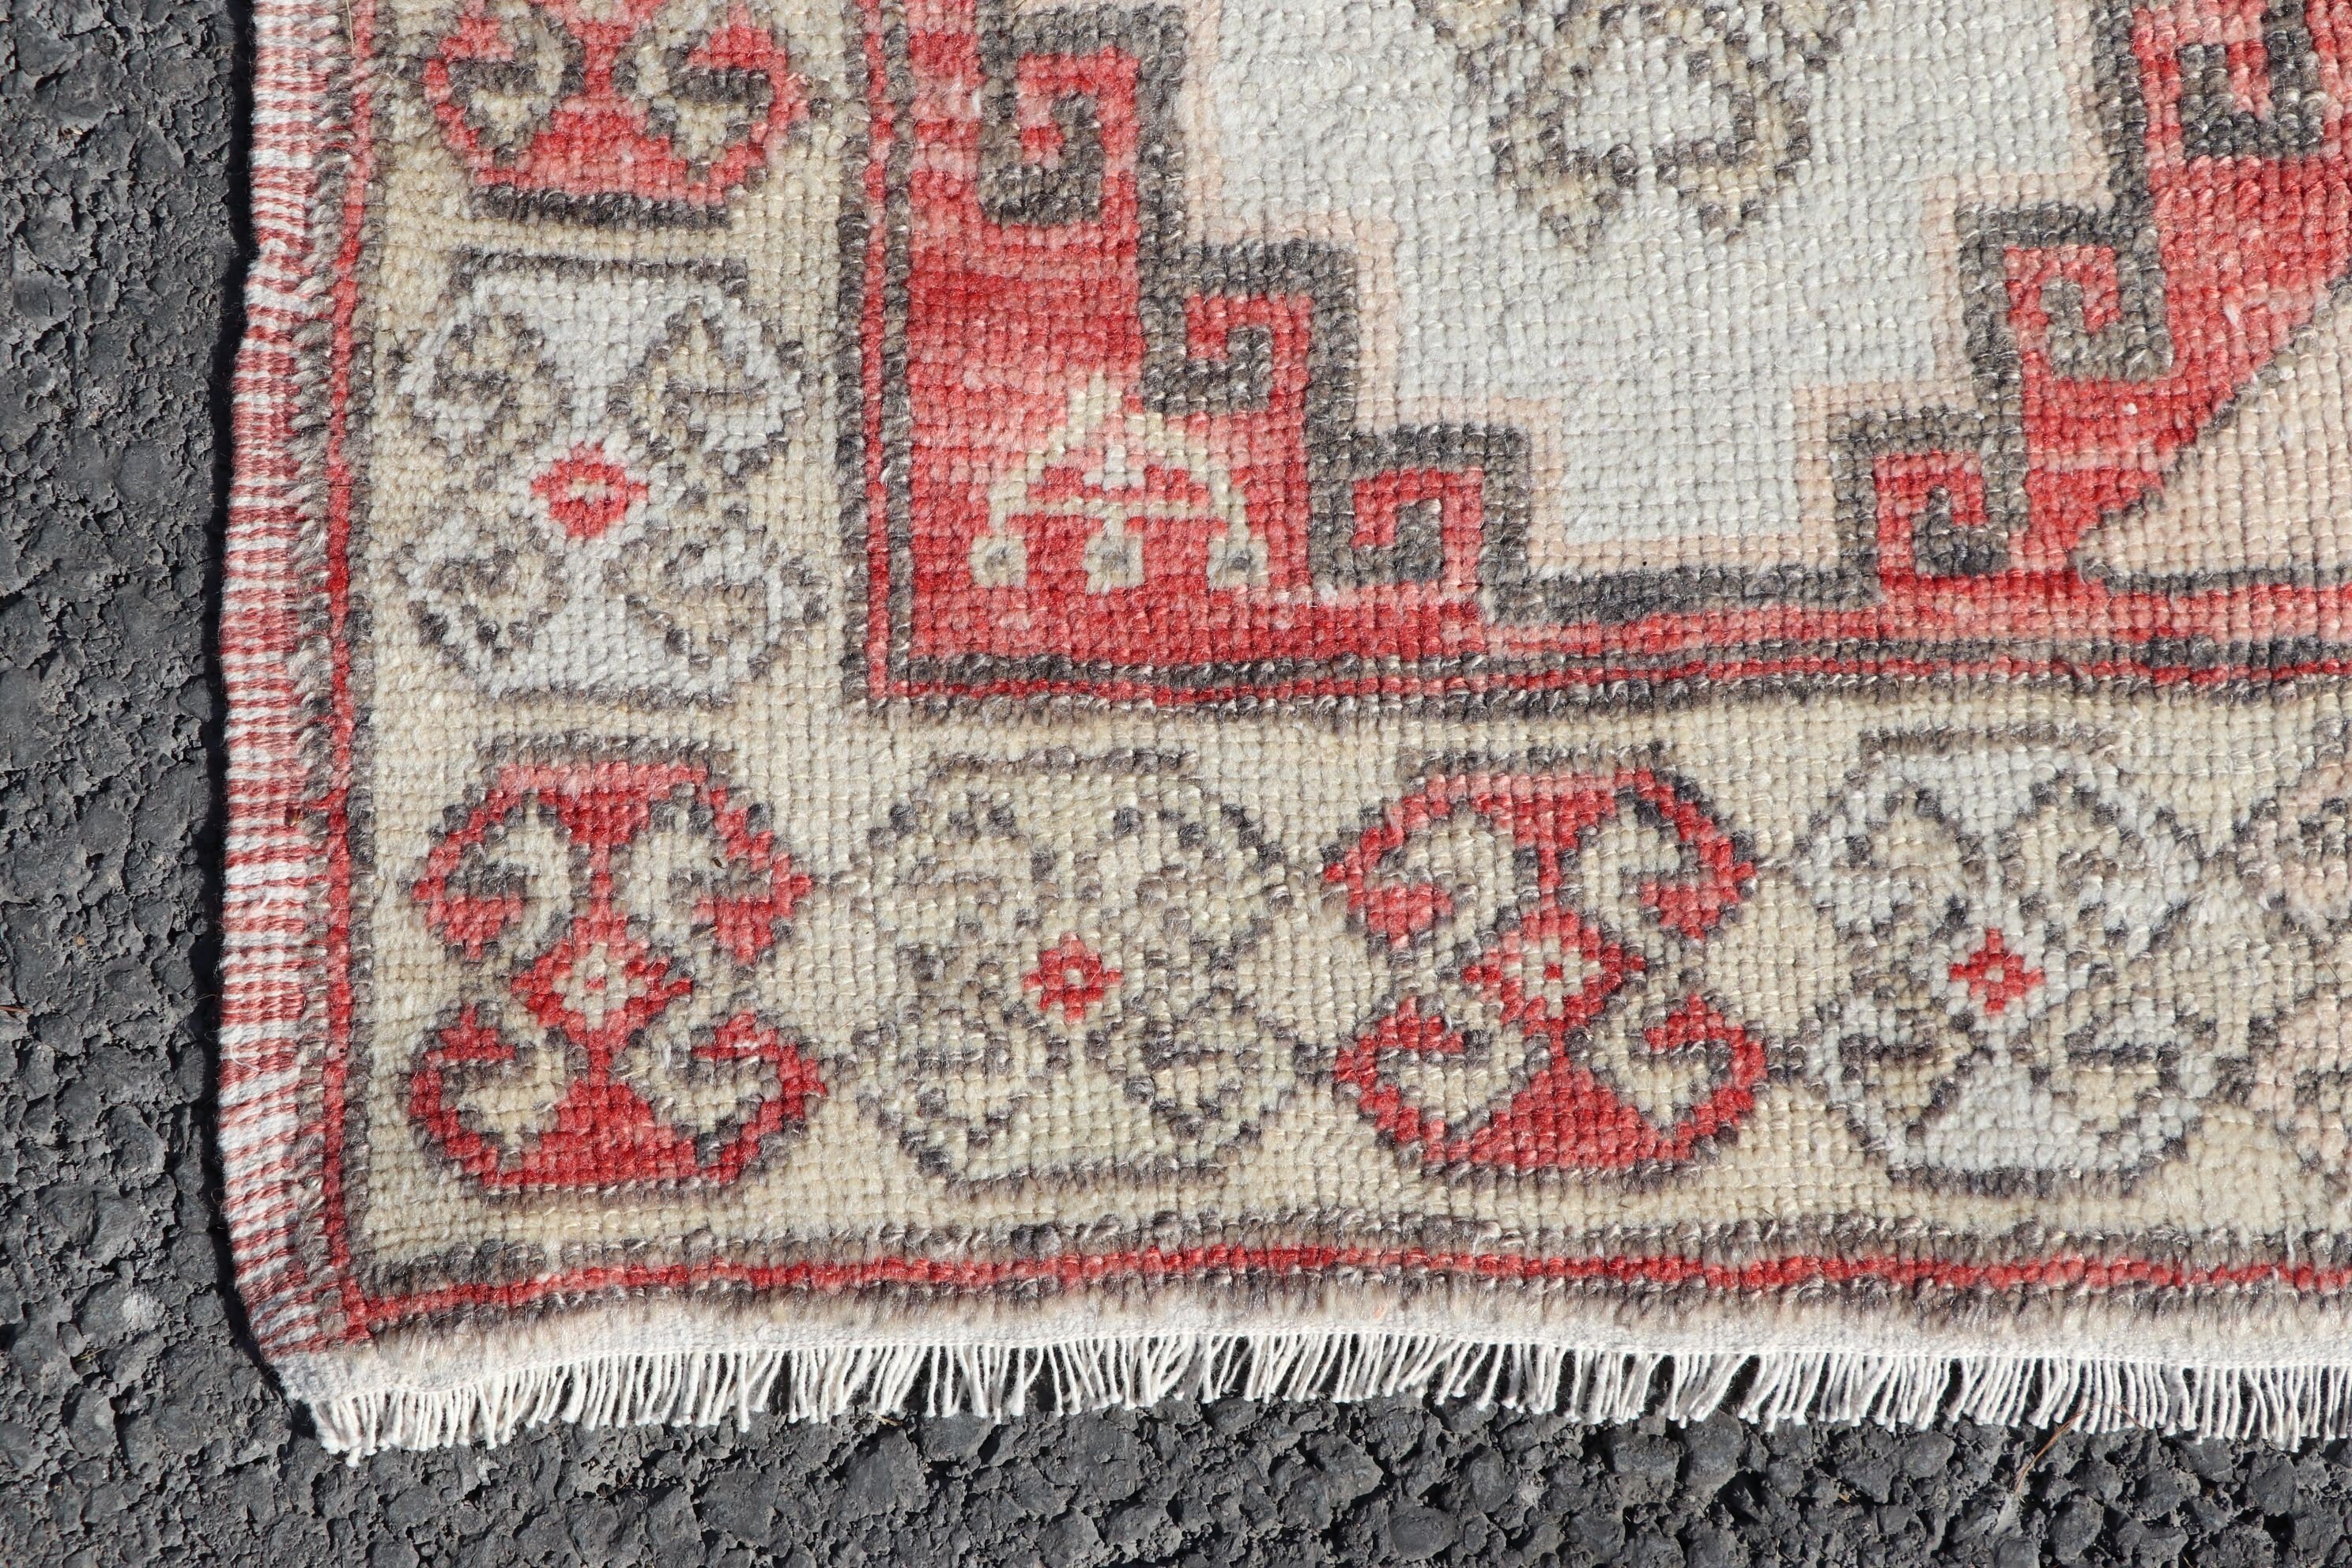 Turkish Rugs, Stair Rug, Rugs for Hallway, Antique Rug, Red Anatolian Rug, Kitchen Rug, 3.2x8.7 ft Runner Rugs, Bedroom Rug, Vintage Rugs